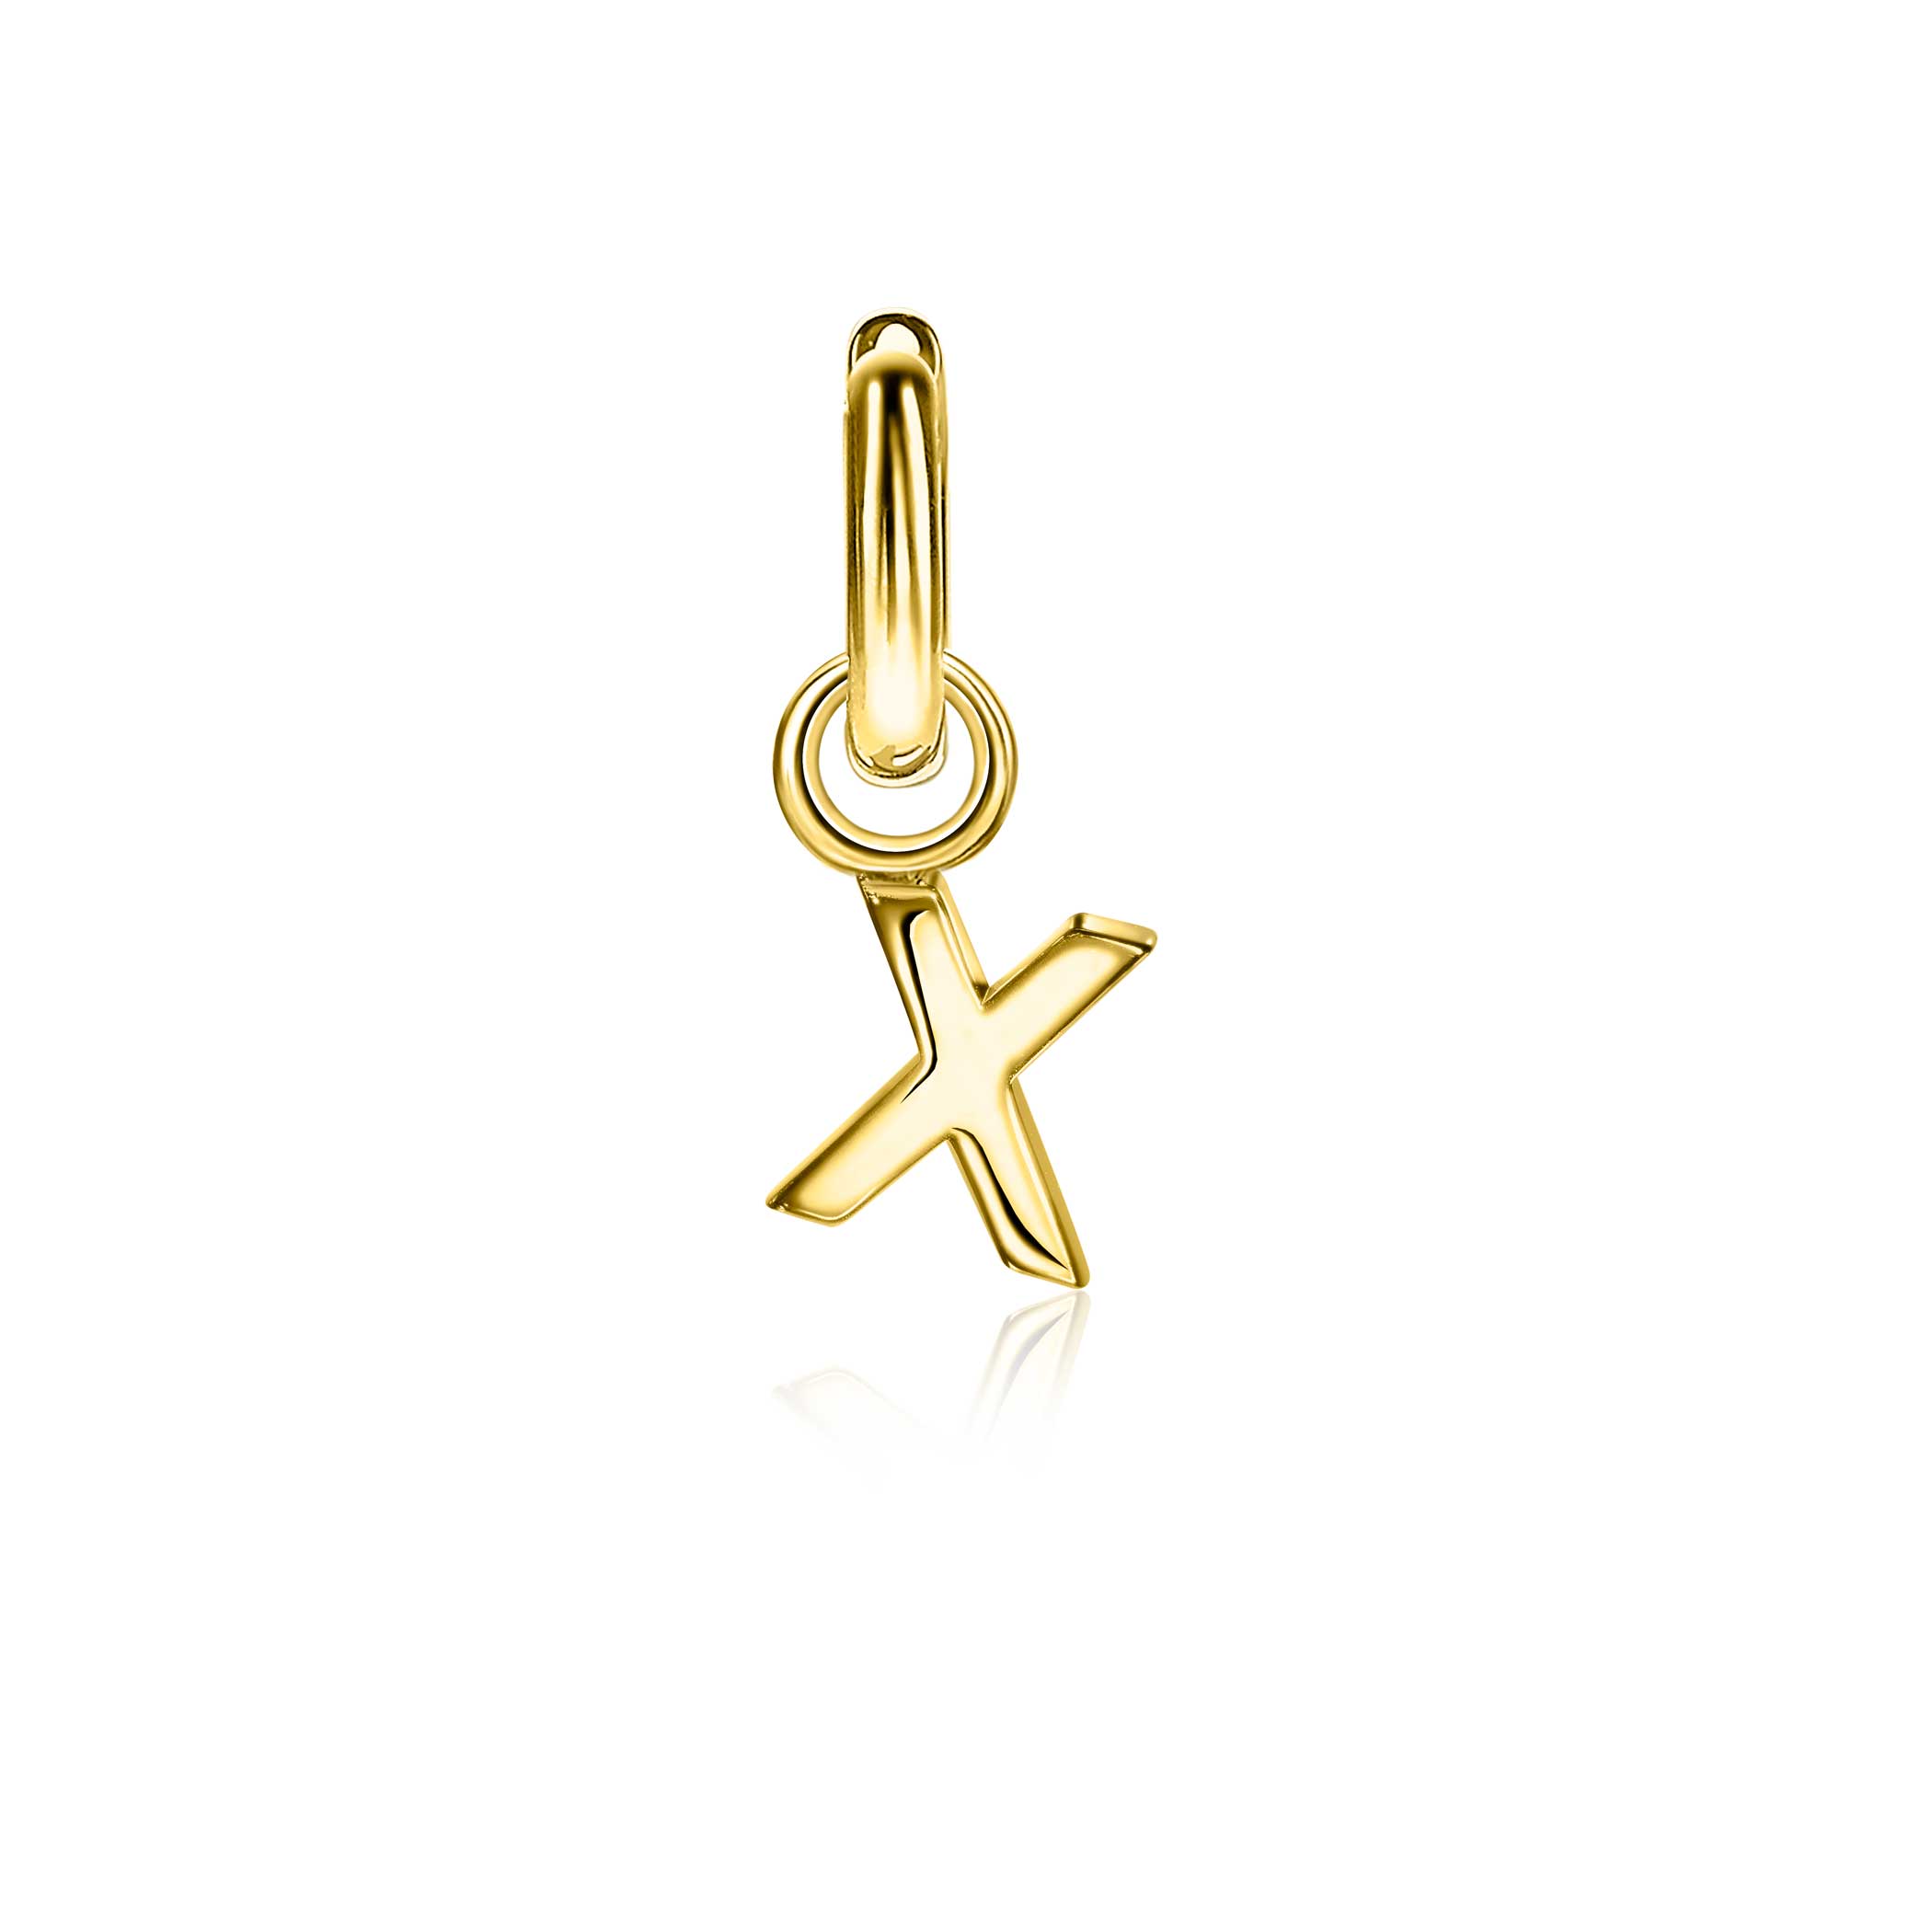 ZINZI Gold Plated Letter Earrings Pendant X price per piece ZICH2145X (excl. hoop earrings)